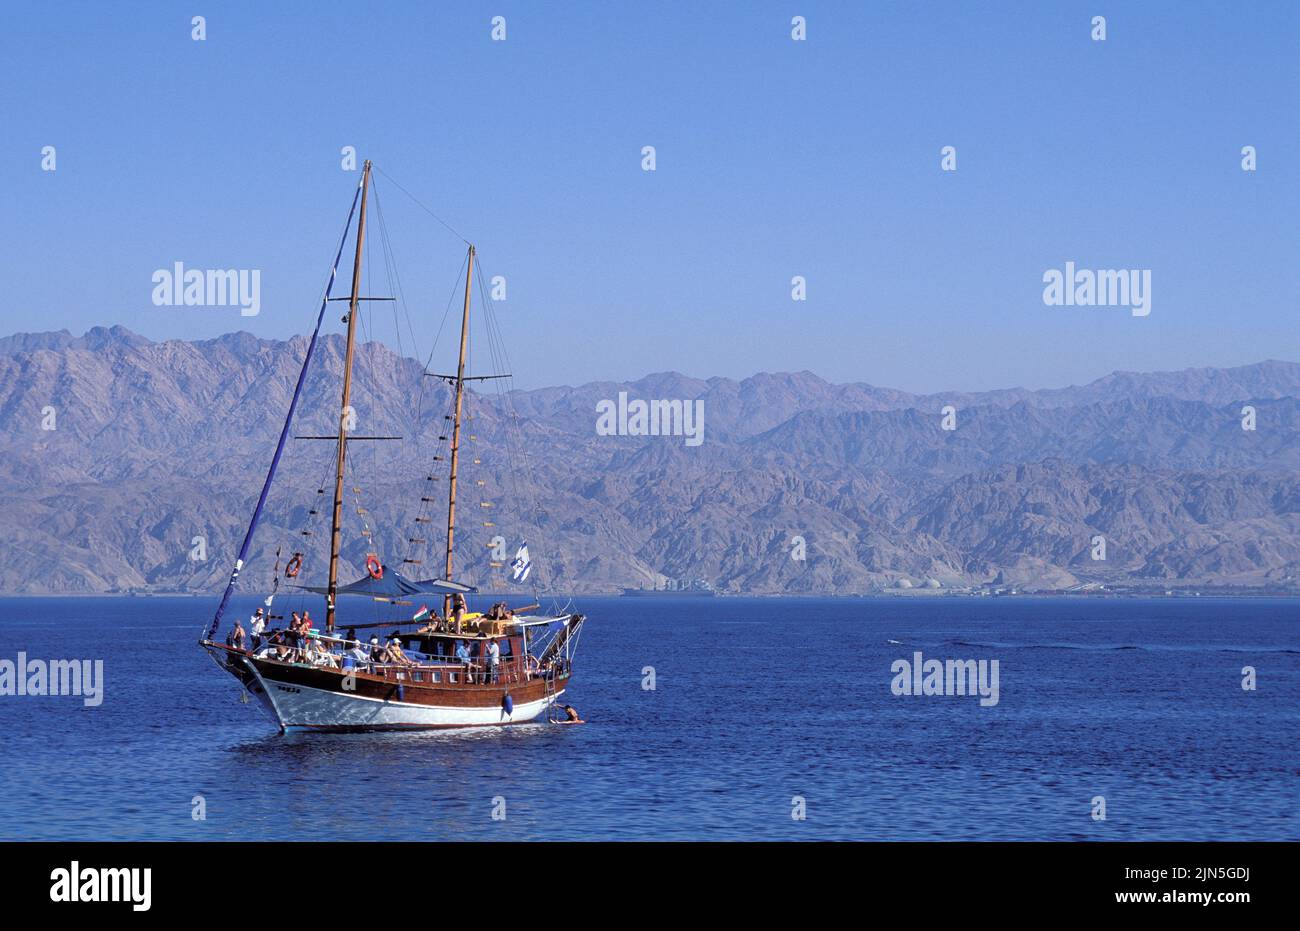 Jordan, Aqaba, boat on the Red Sea Stock Photo